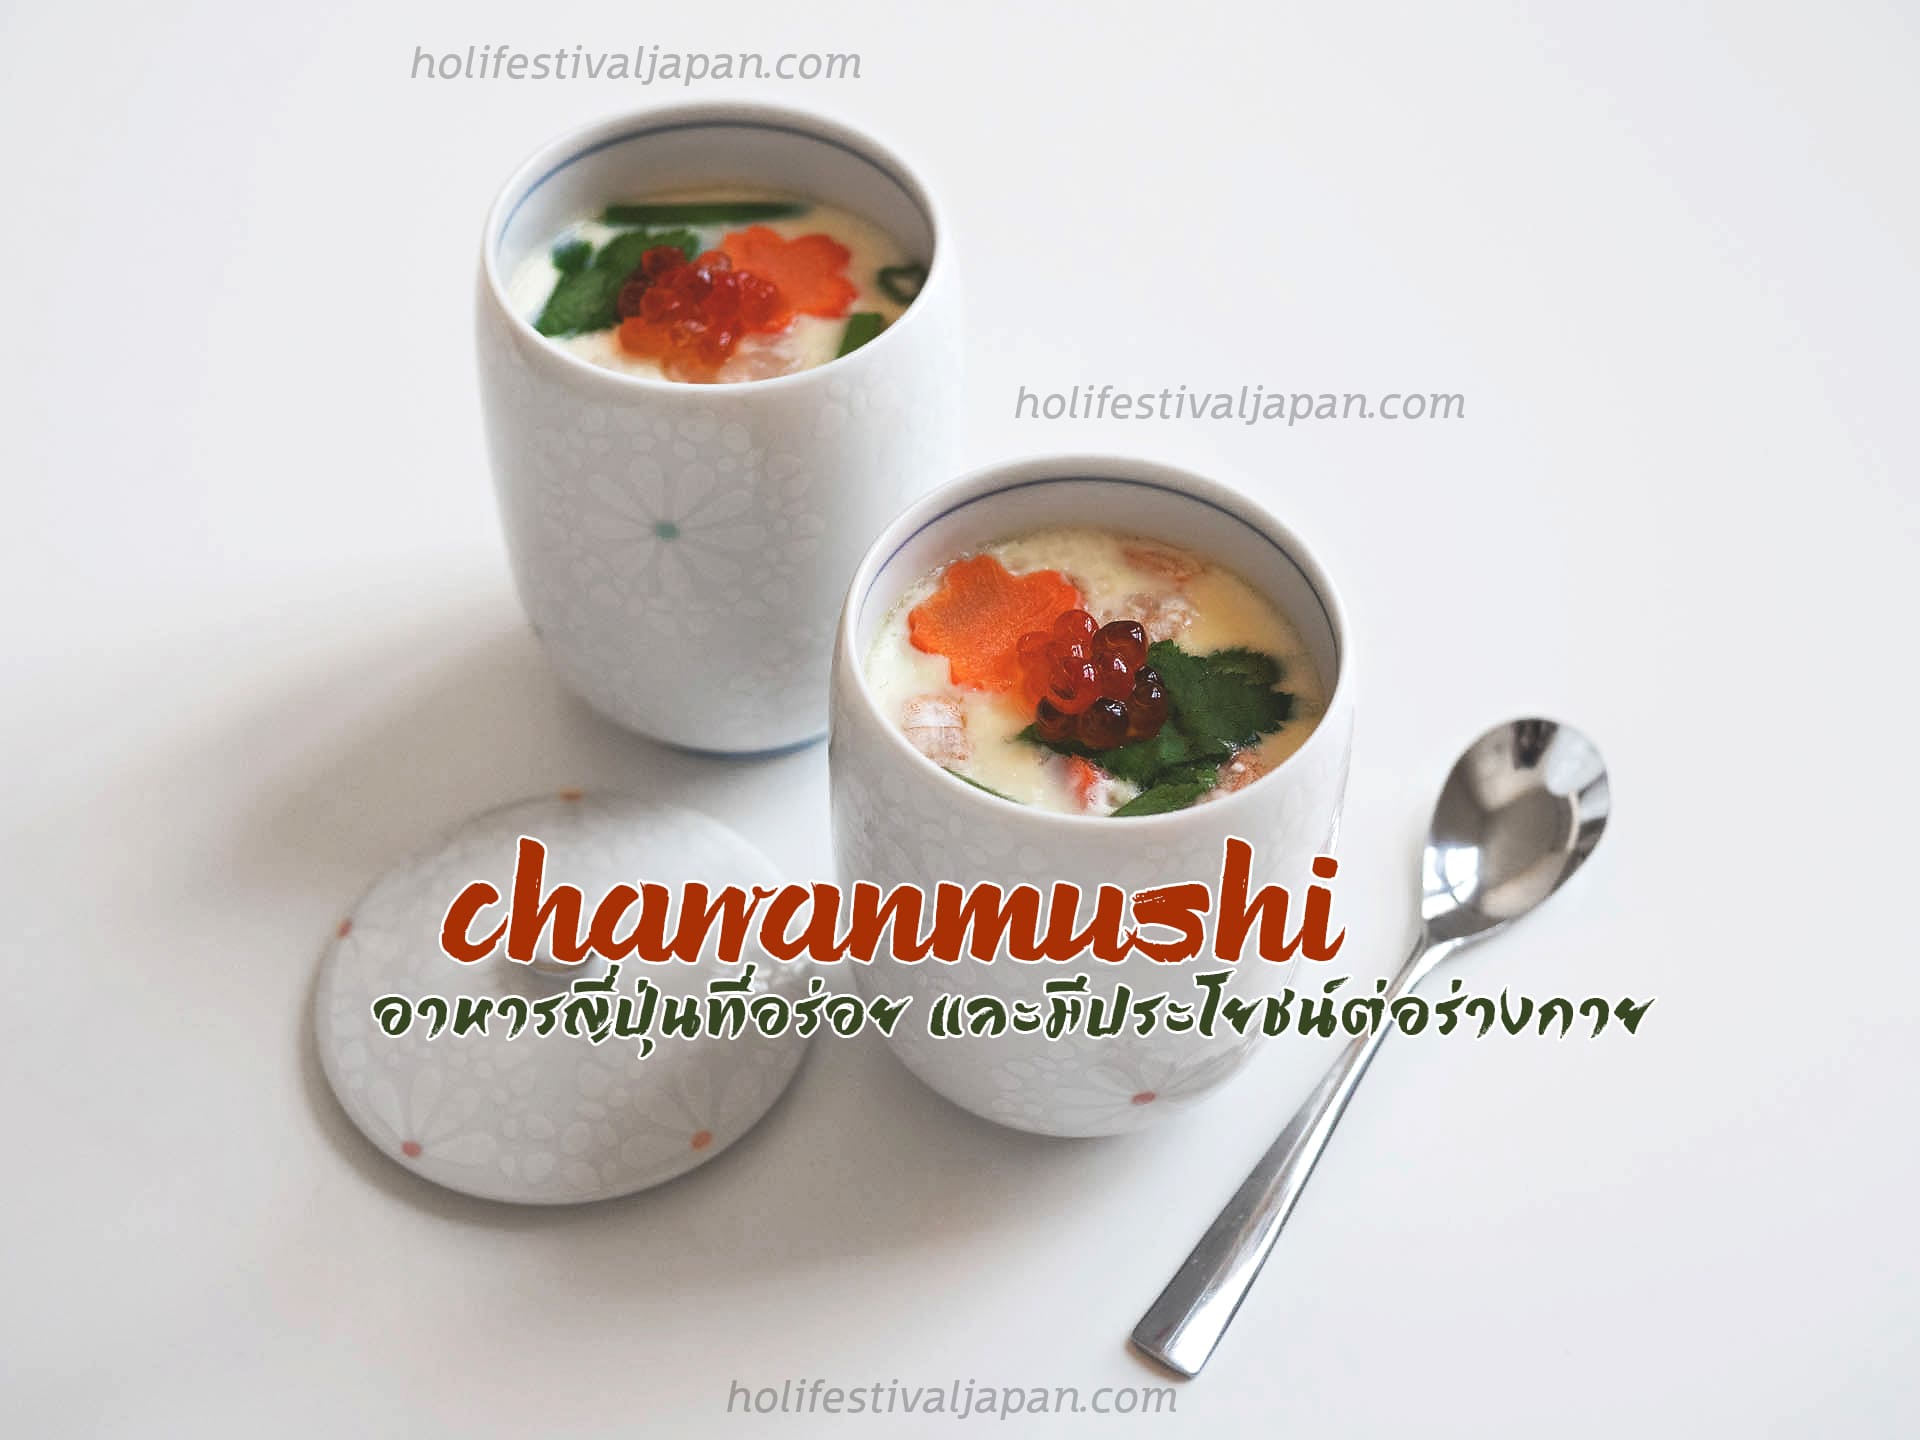 Chawanmushi2 - Chawanmushi อาหารญี่ปุ่นที่อร่อย และมีประโยชน์ต่อร่างกาย